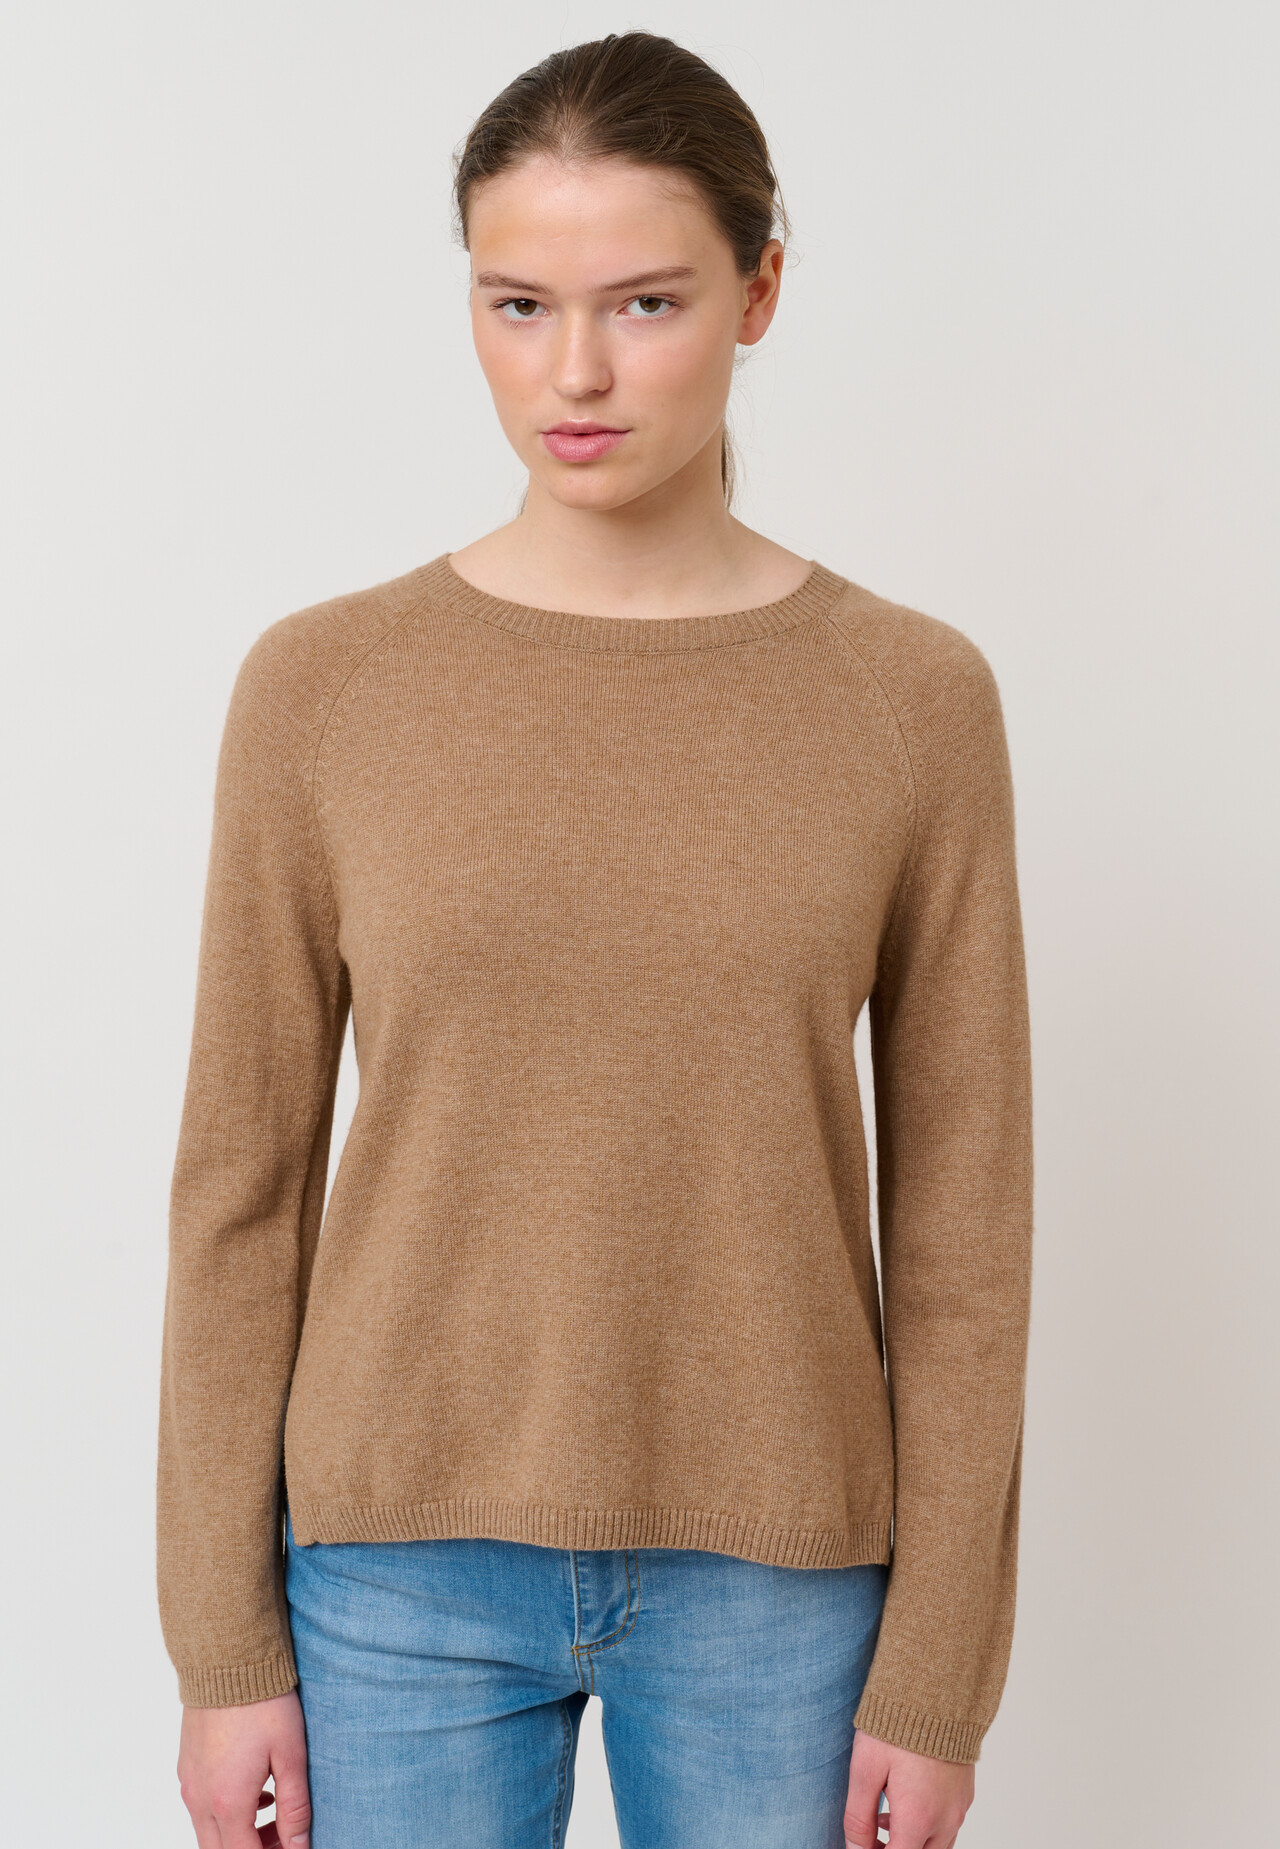 CRÉTON CRLinea kashmir sweater (140 CM M)